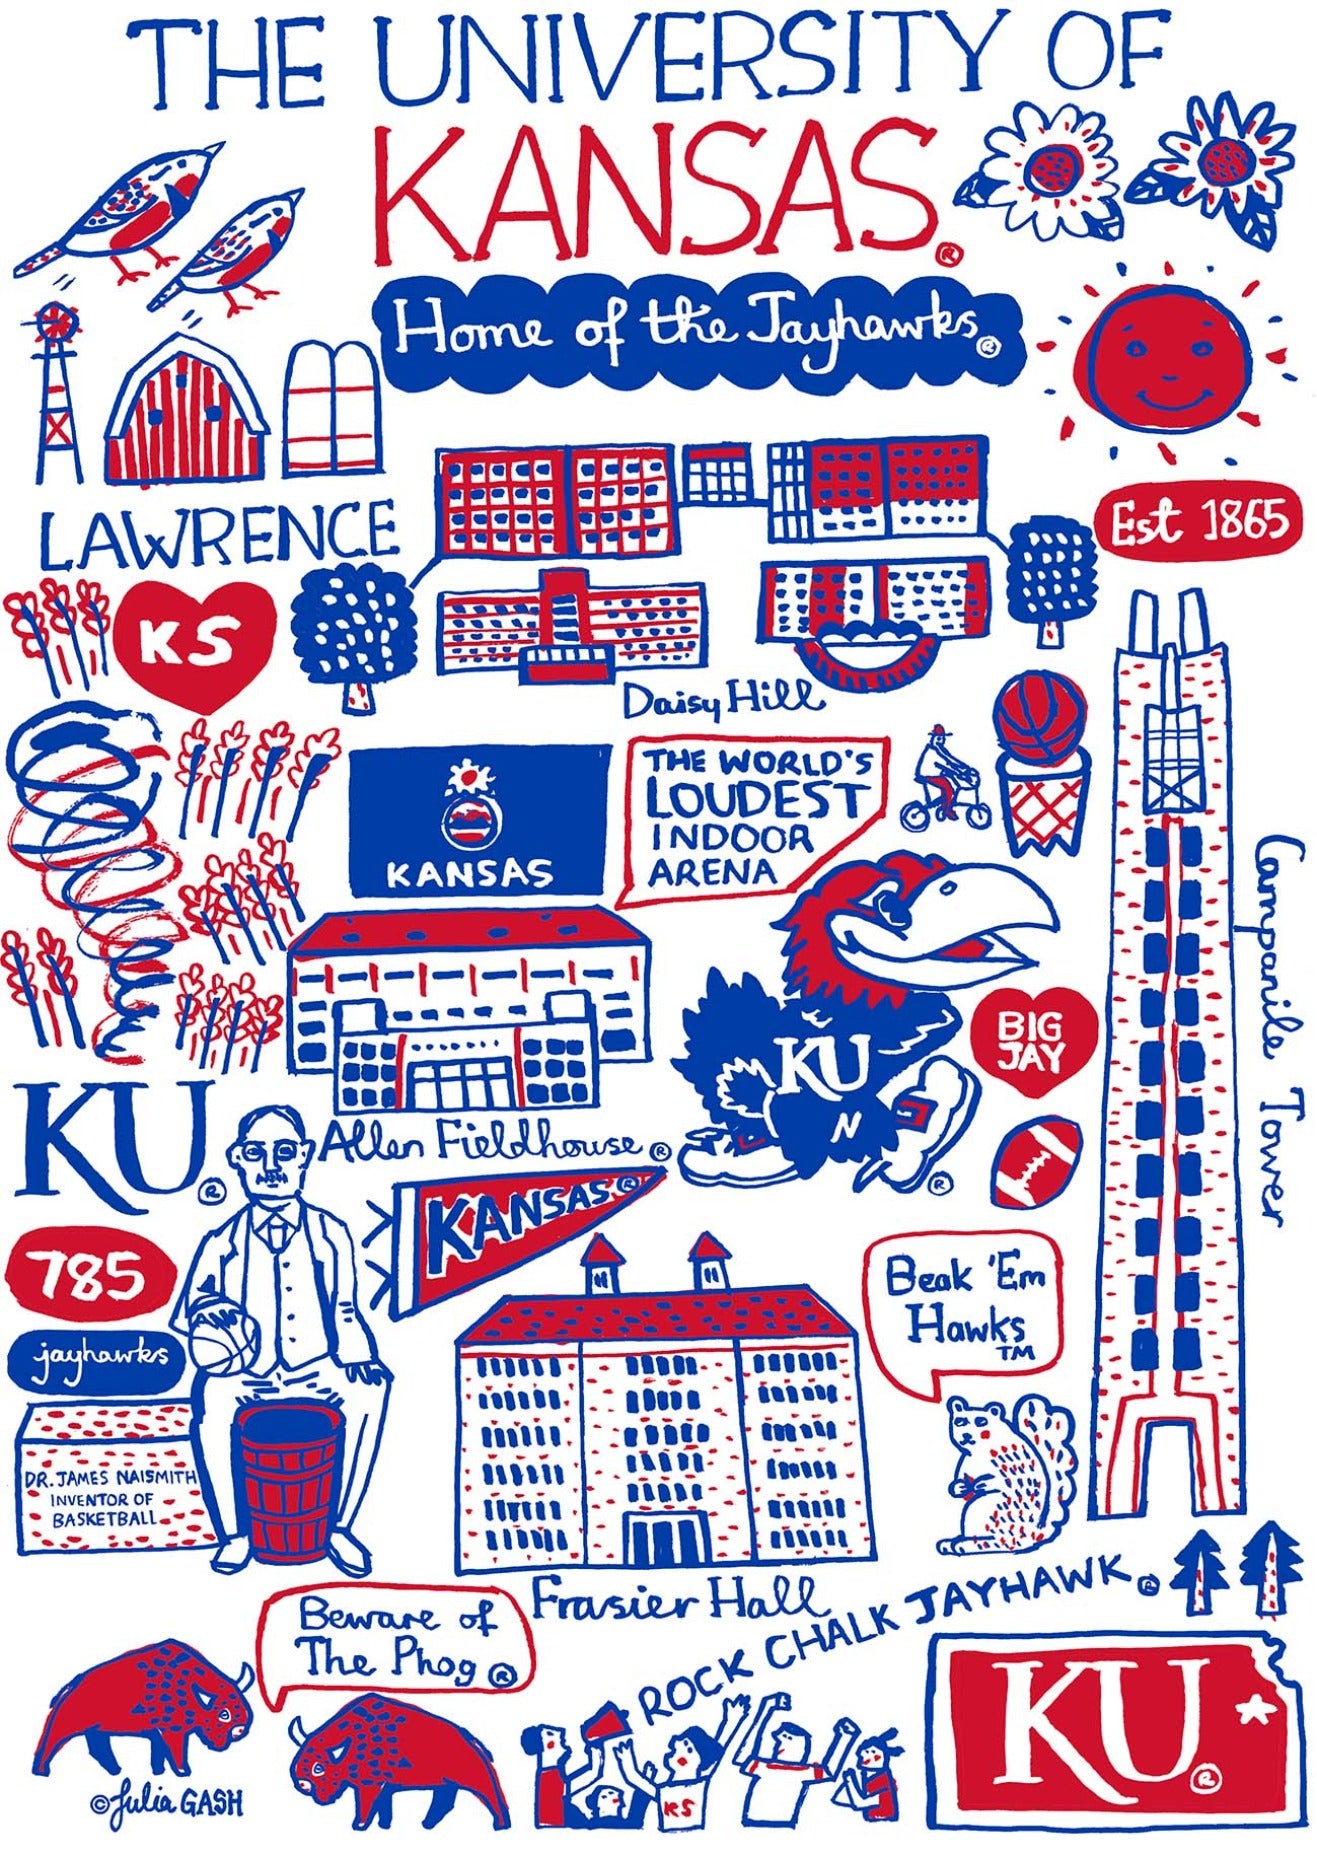 University of Kansas by Julia Gash